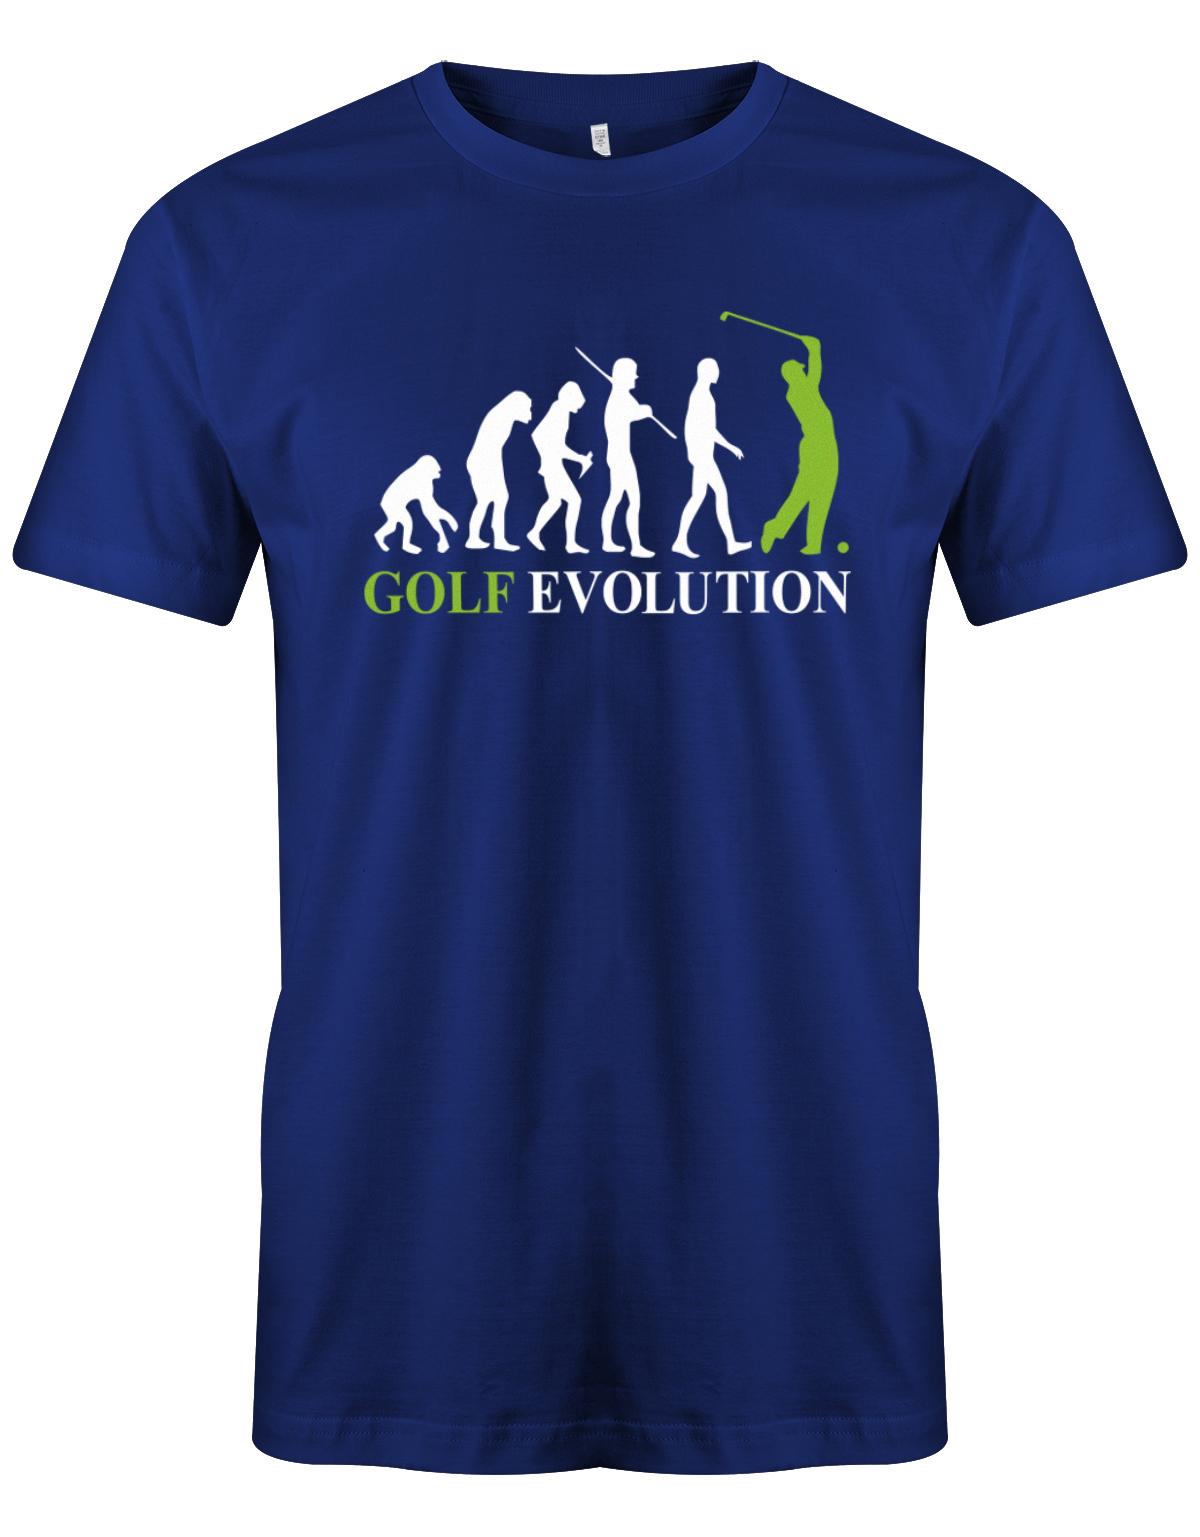 Golf-evolution-Herren-Shirt-Royalblau